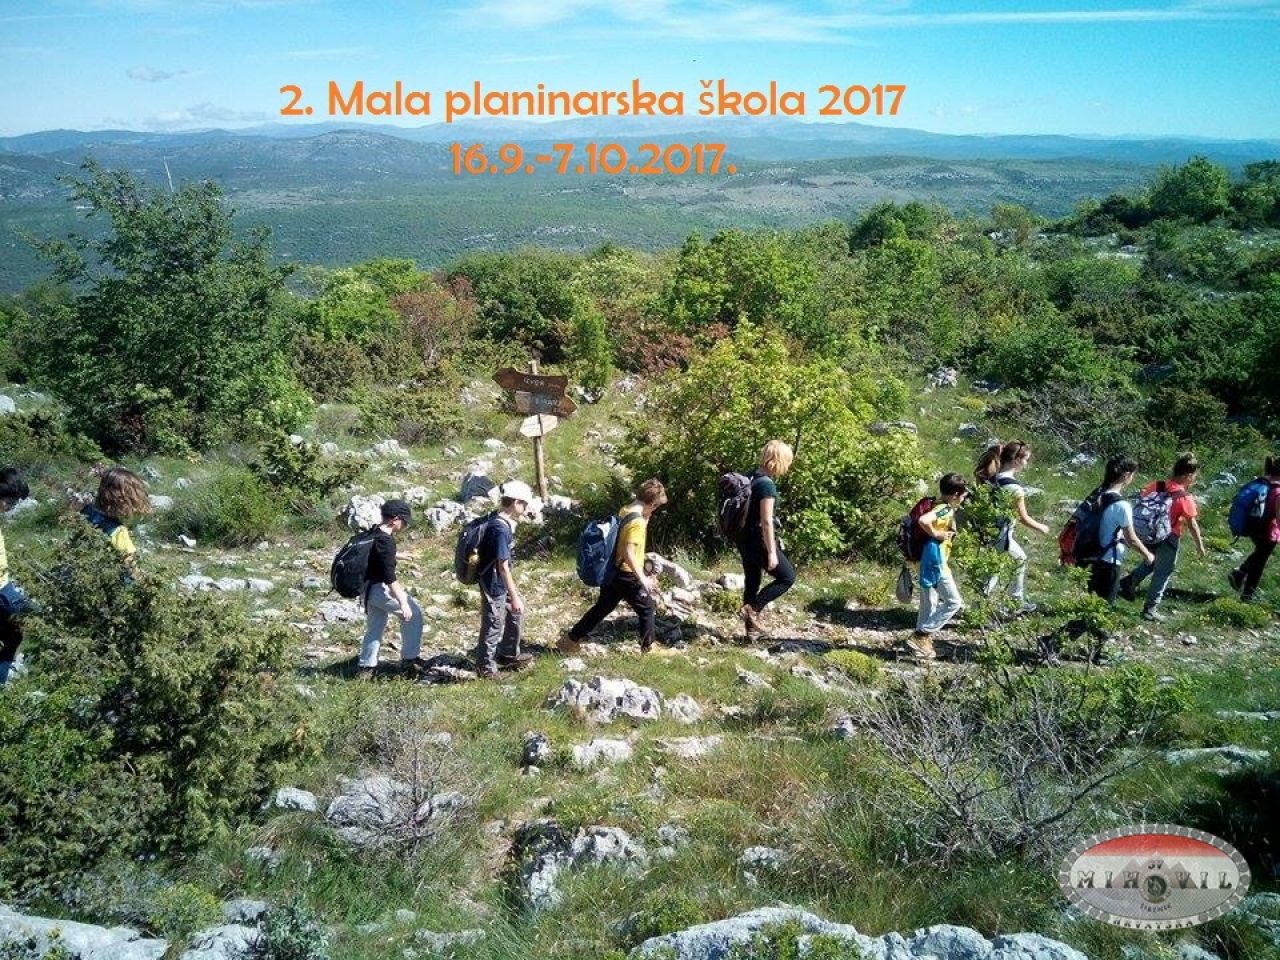 2. Mala planinarska škola 2017 